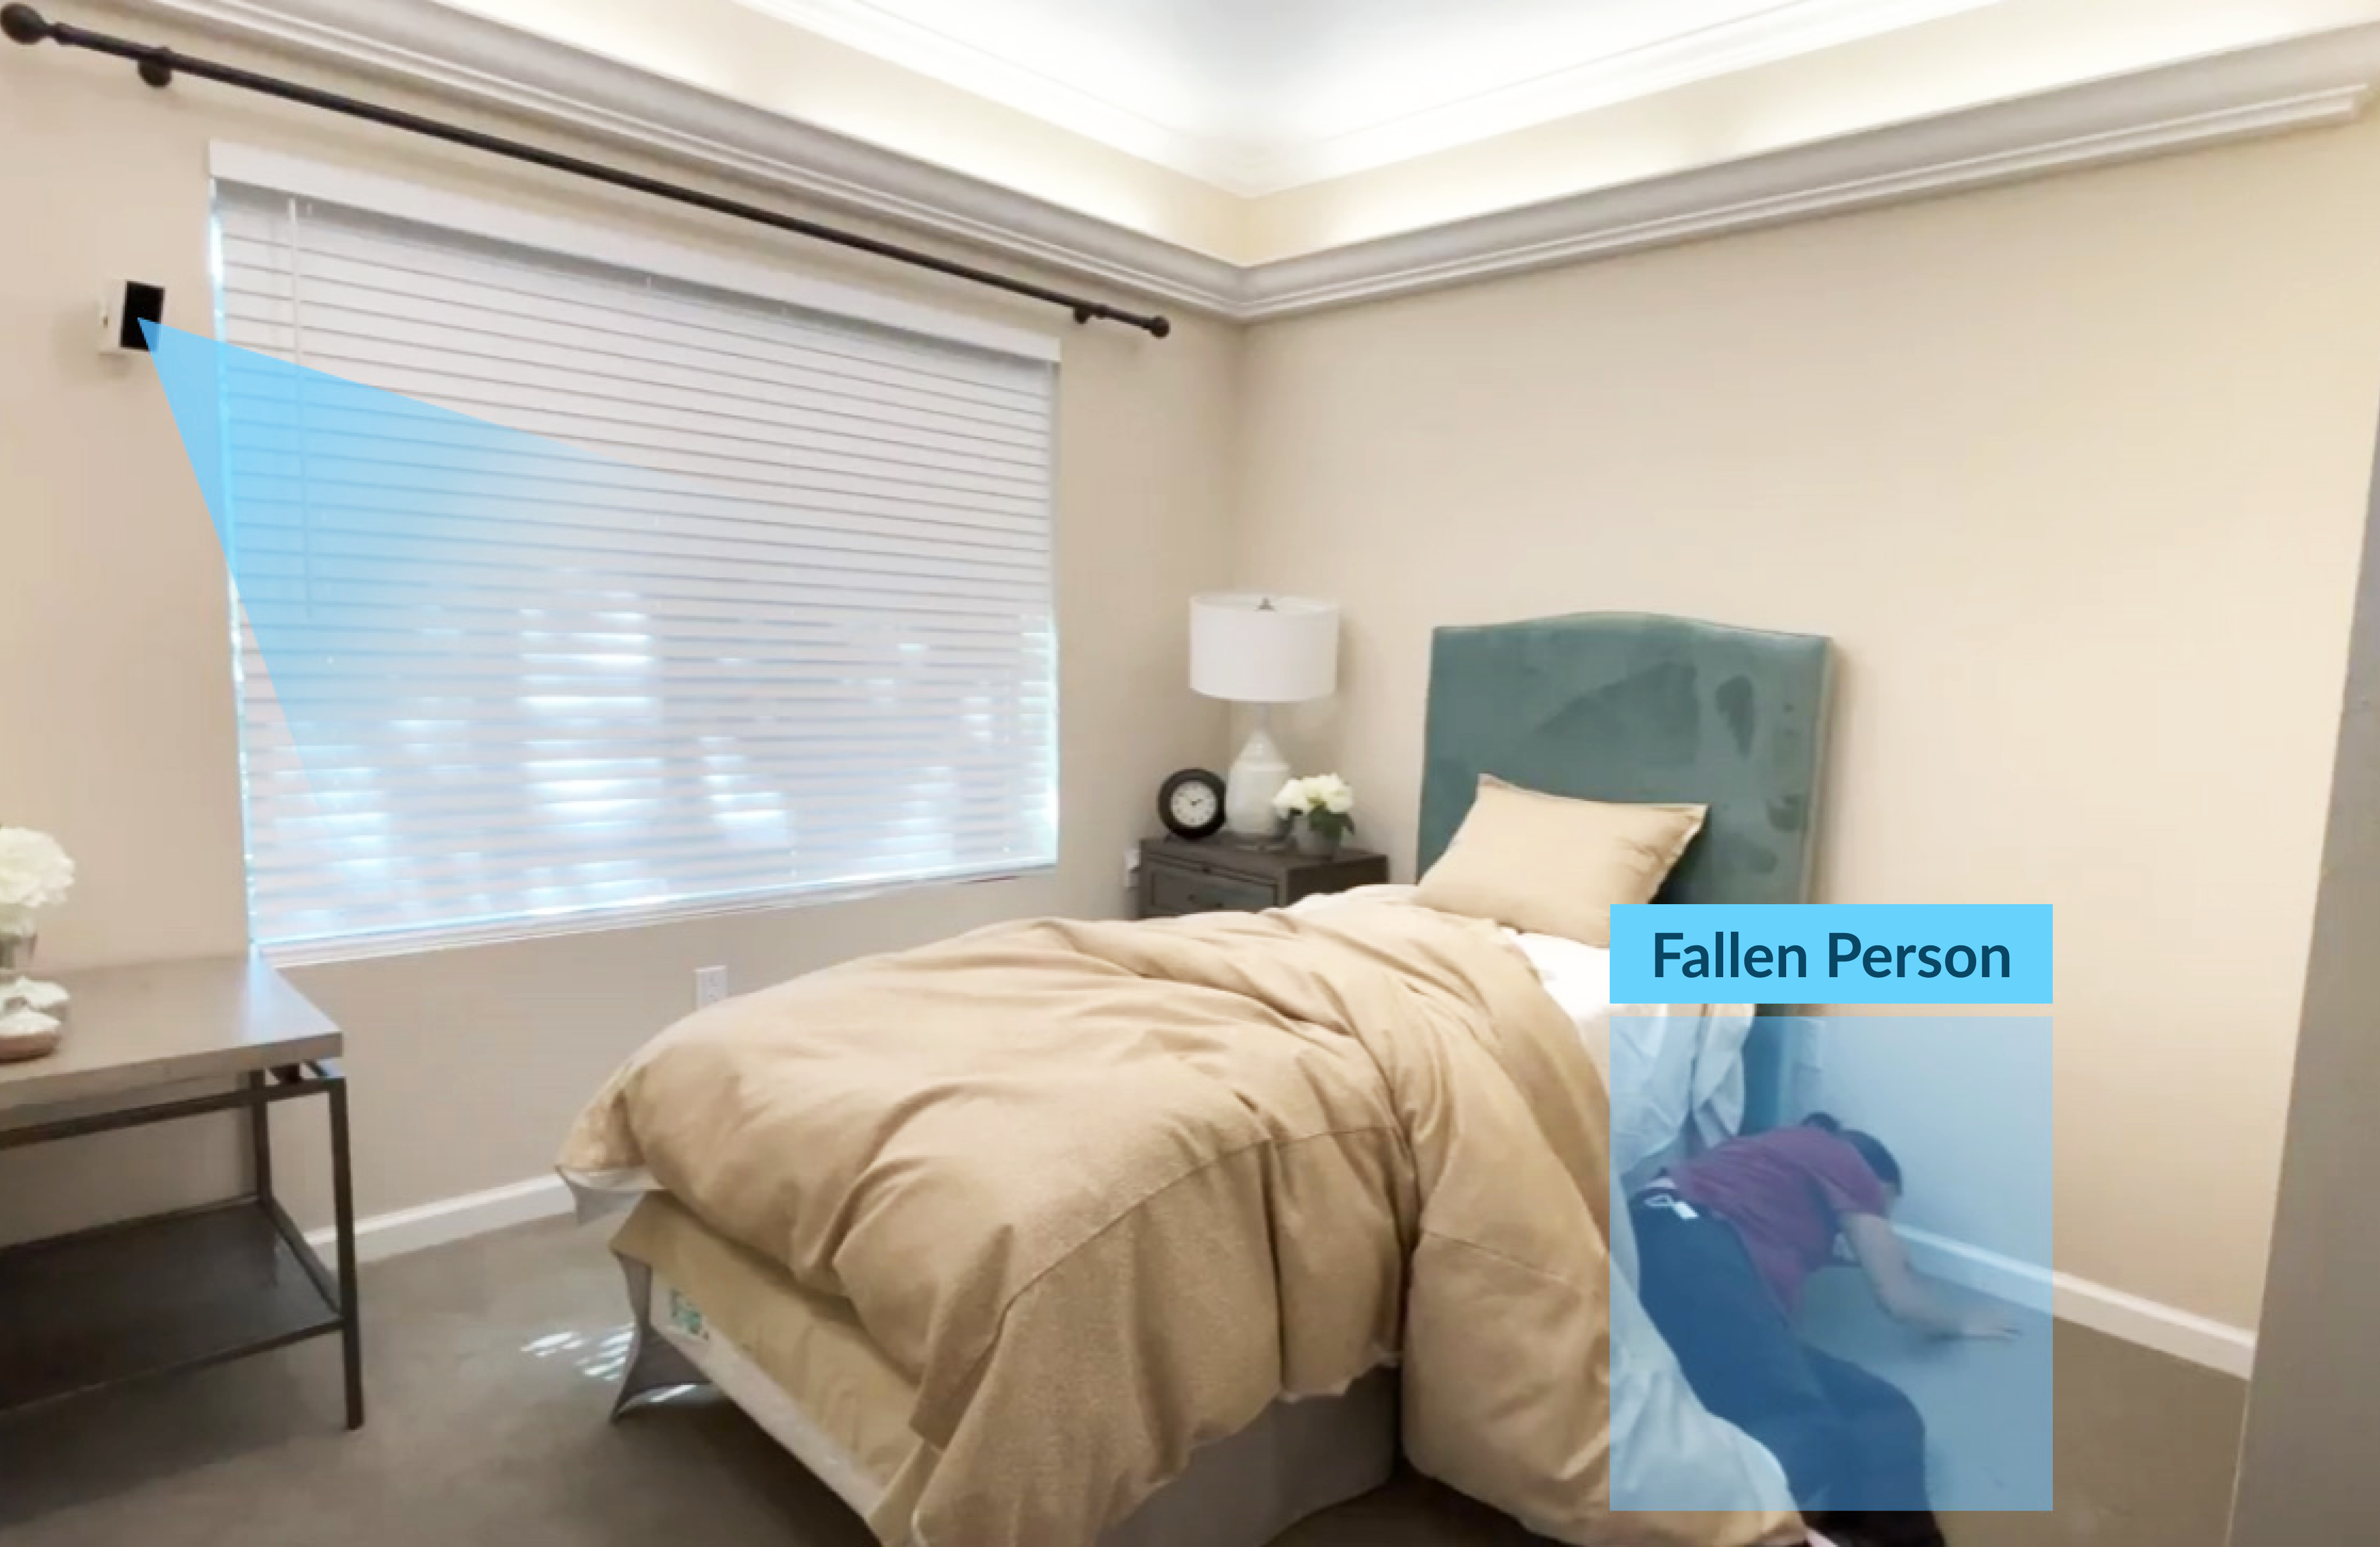 Mercury AI device on bedroom wall